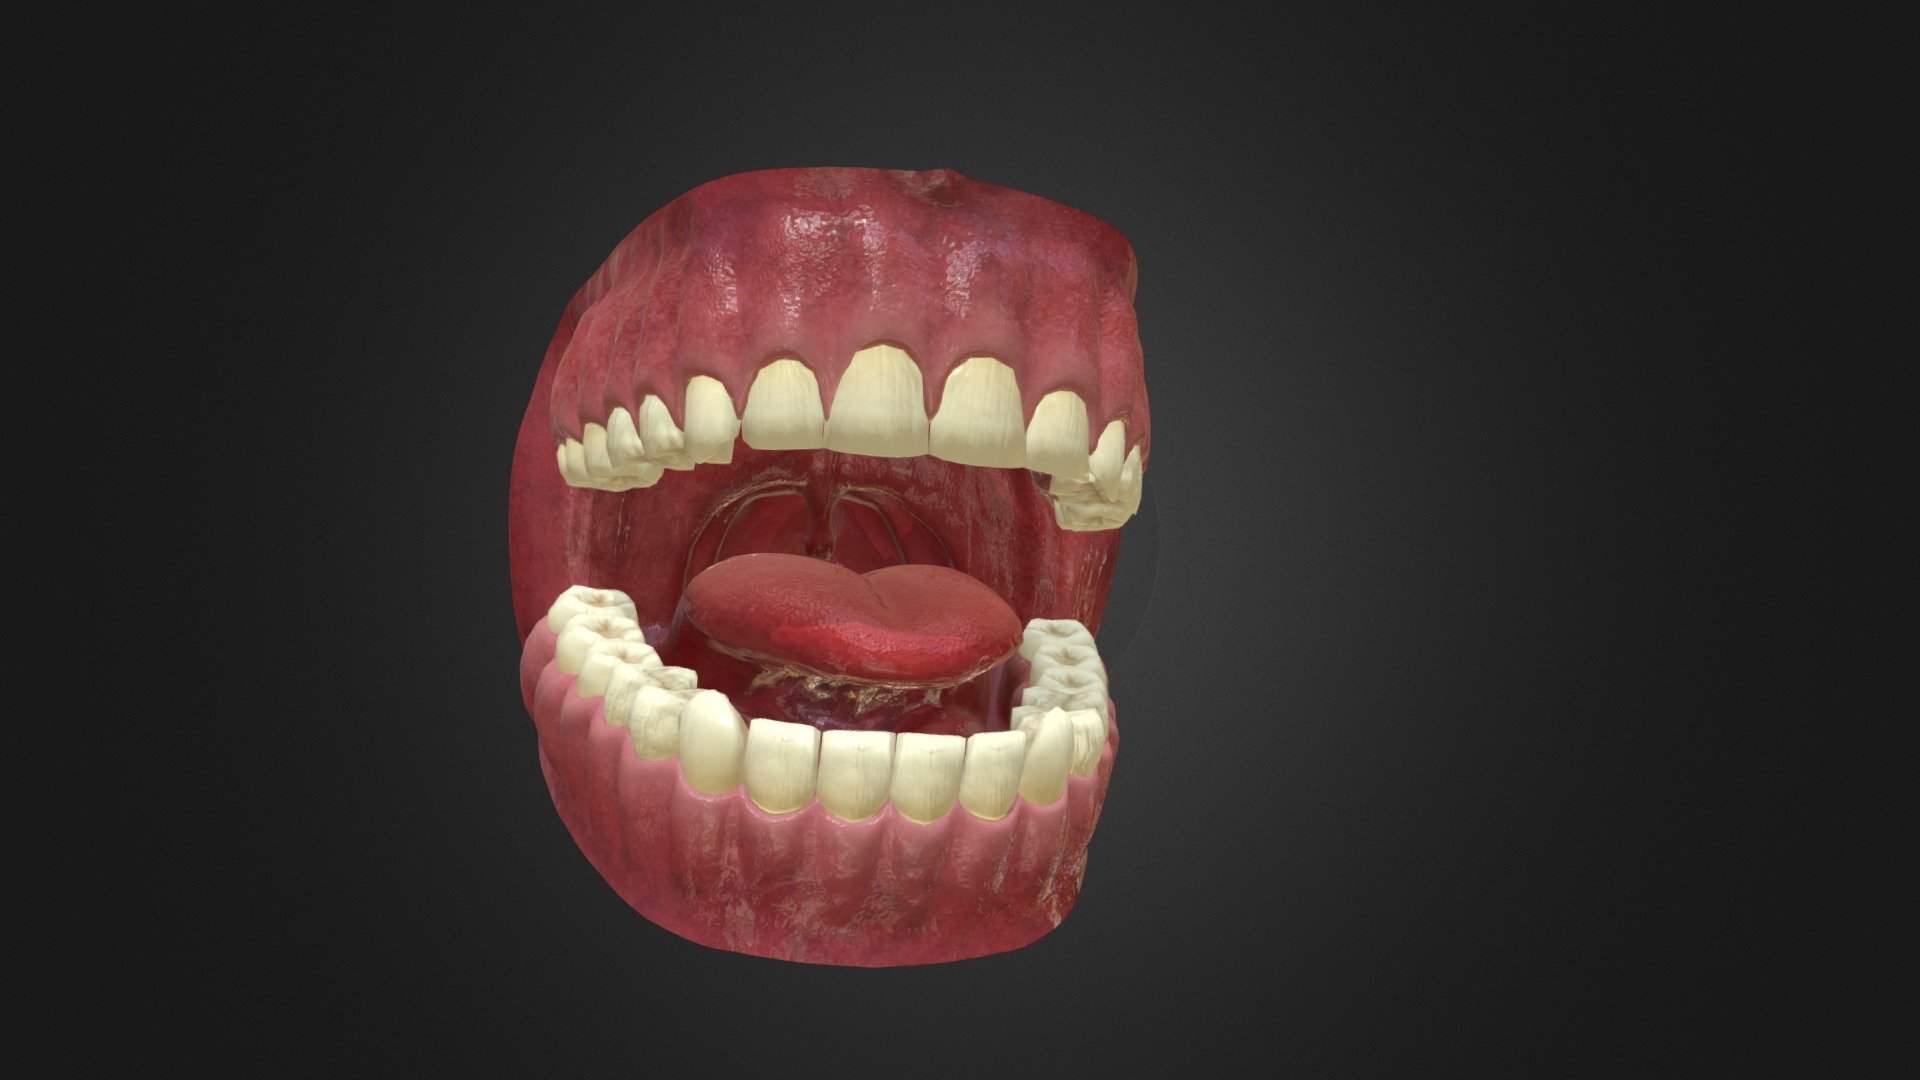 Photorealistic Mouth 3d Model By Hrafnarisak 1cad337 Sketchfab